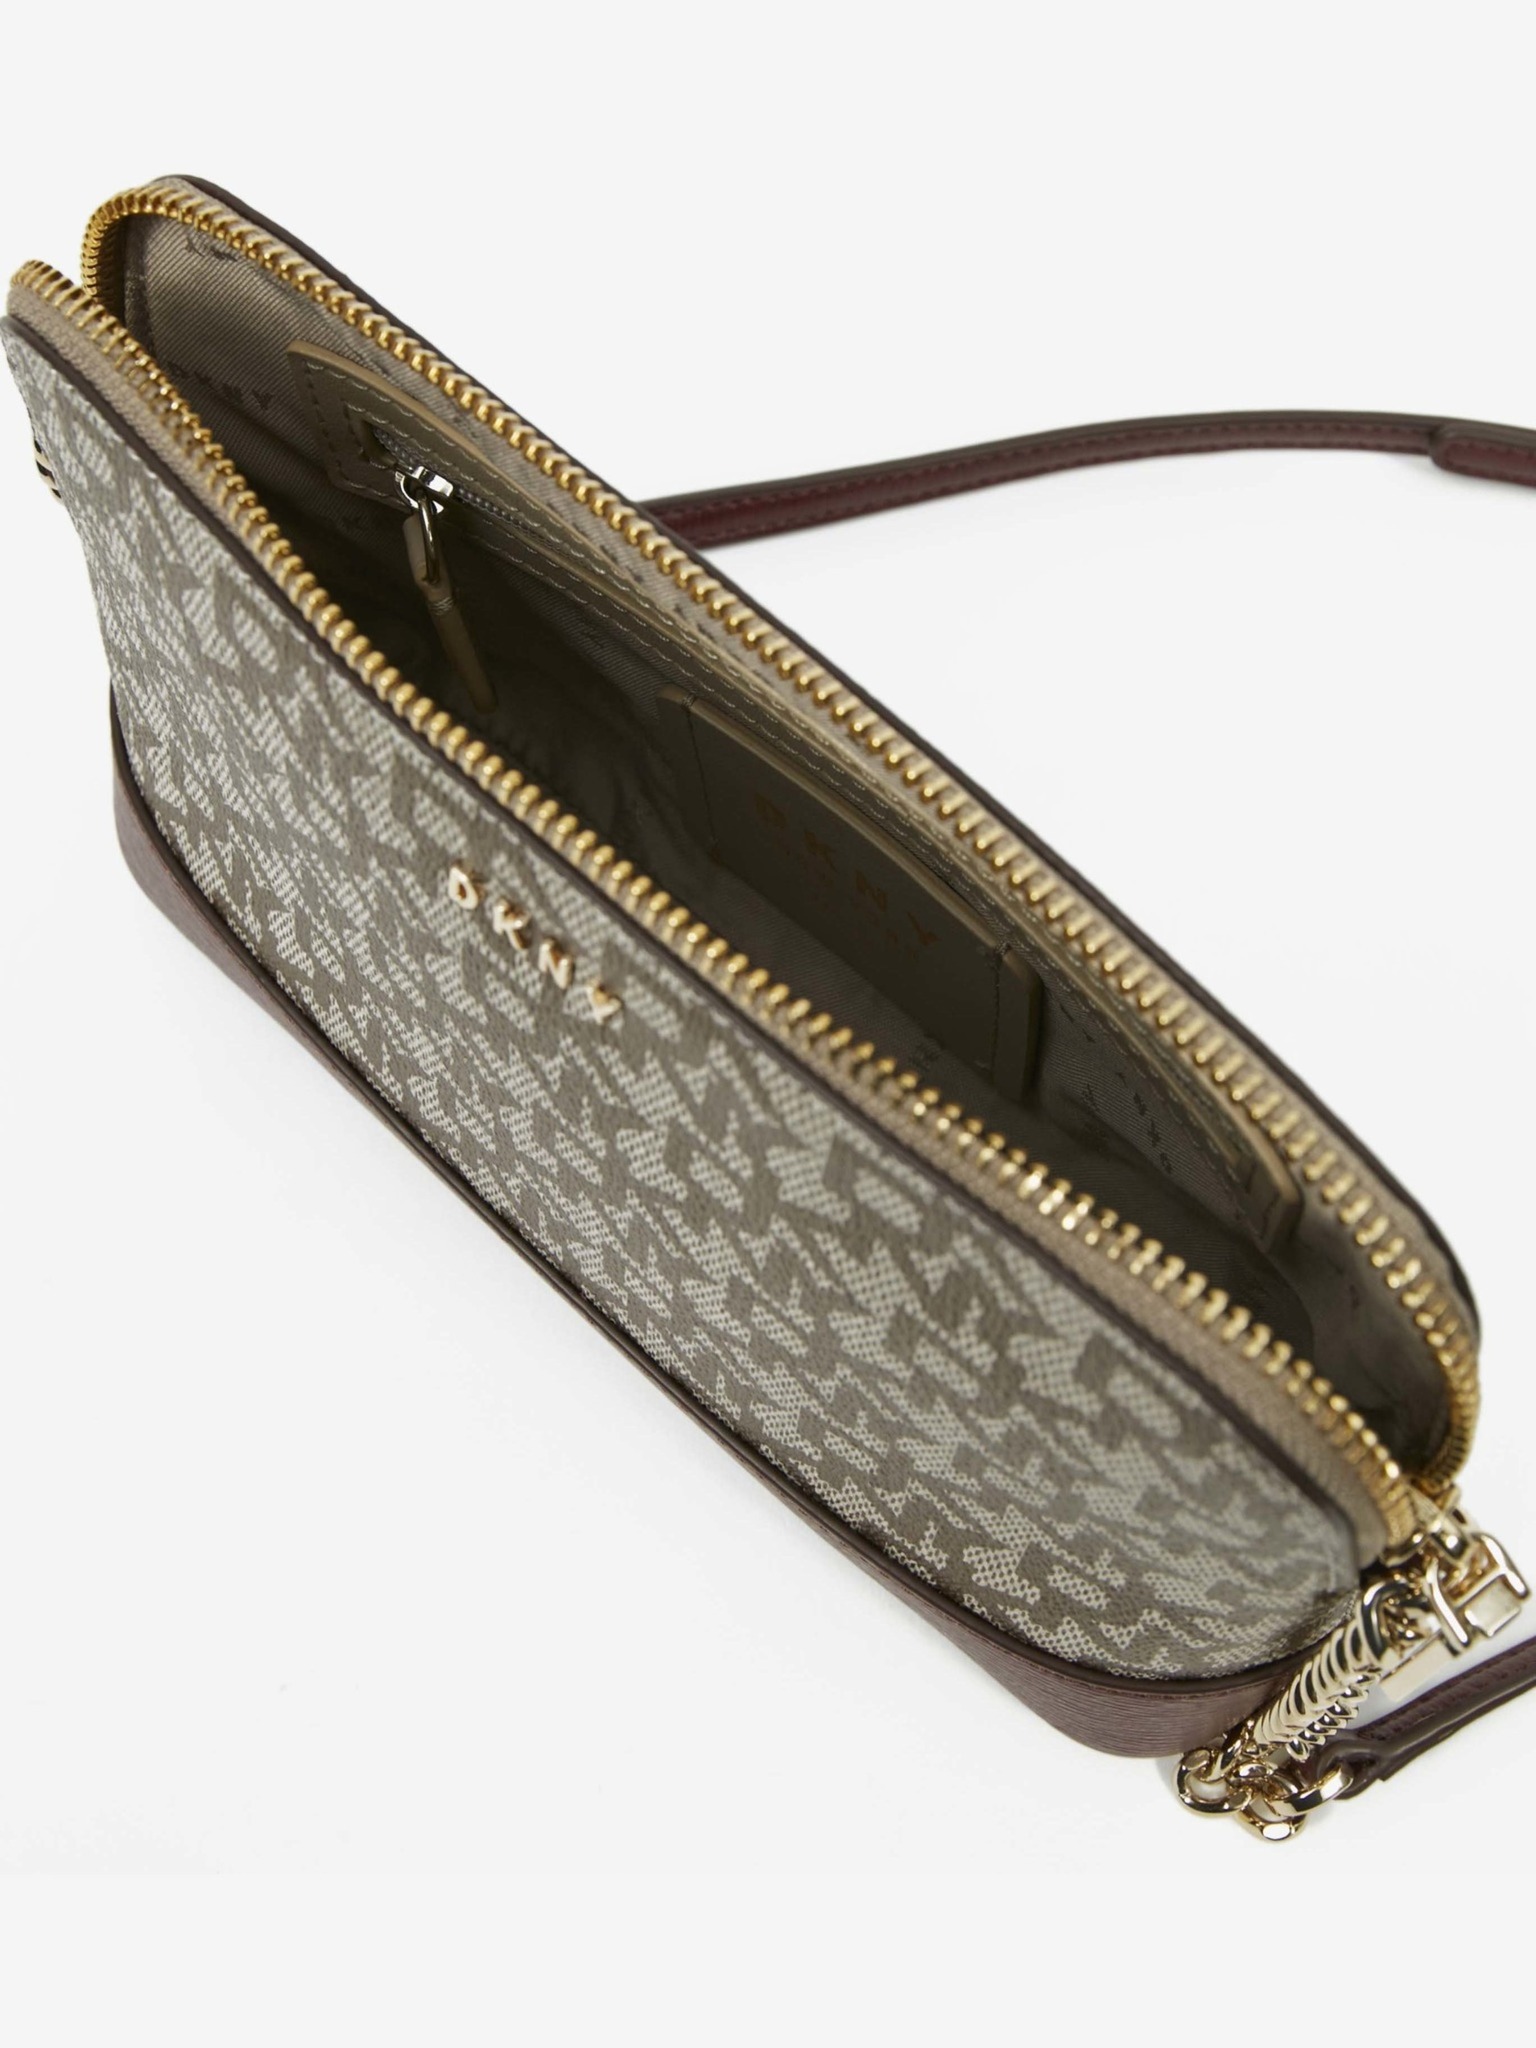 DKNY: handbag for woman - Brown  Dkny handbag R31AJX14 online at